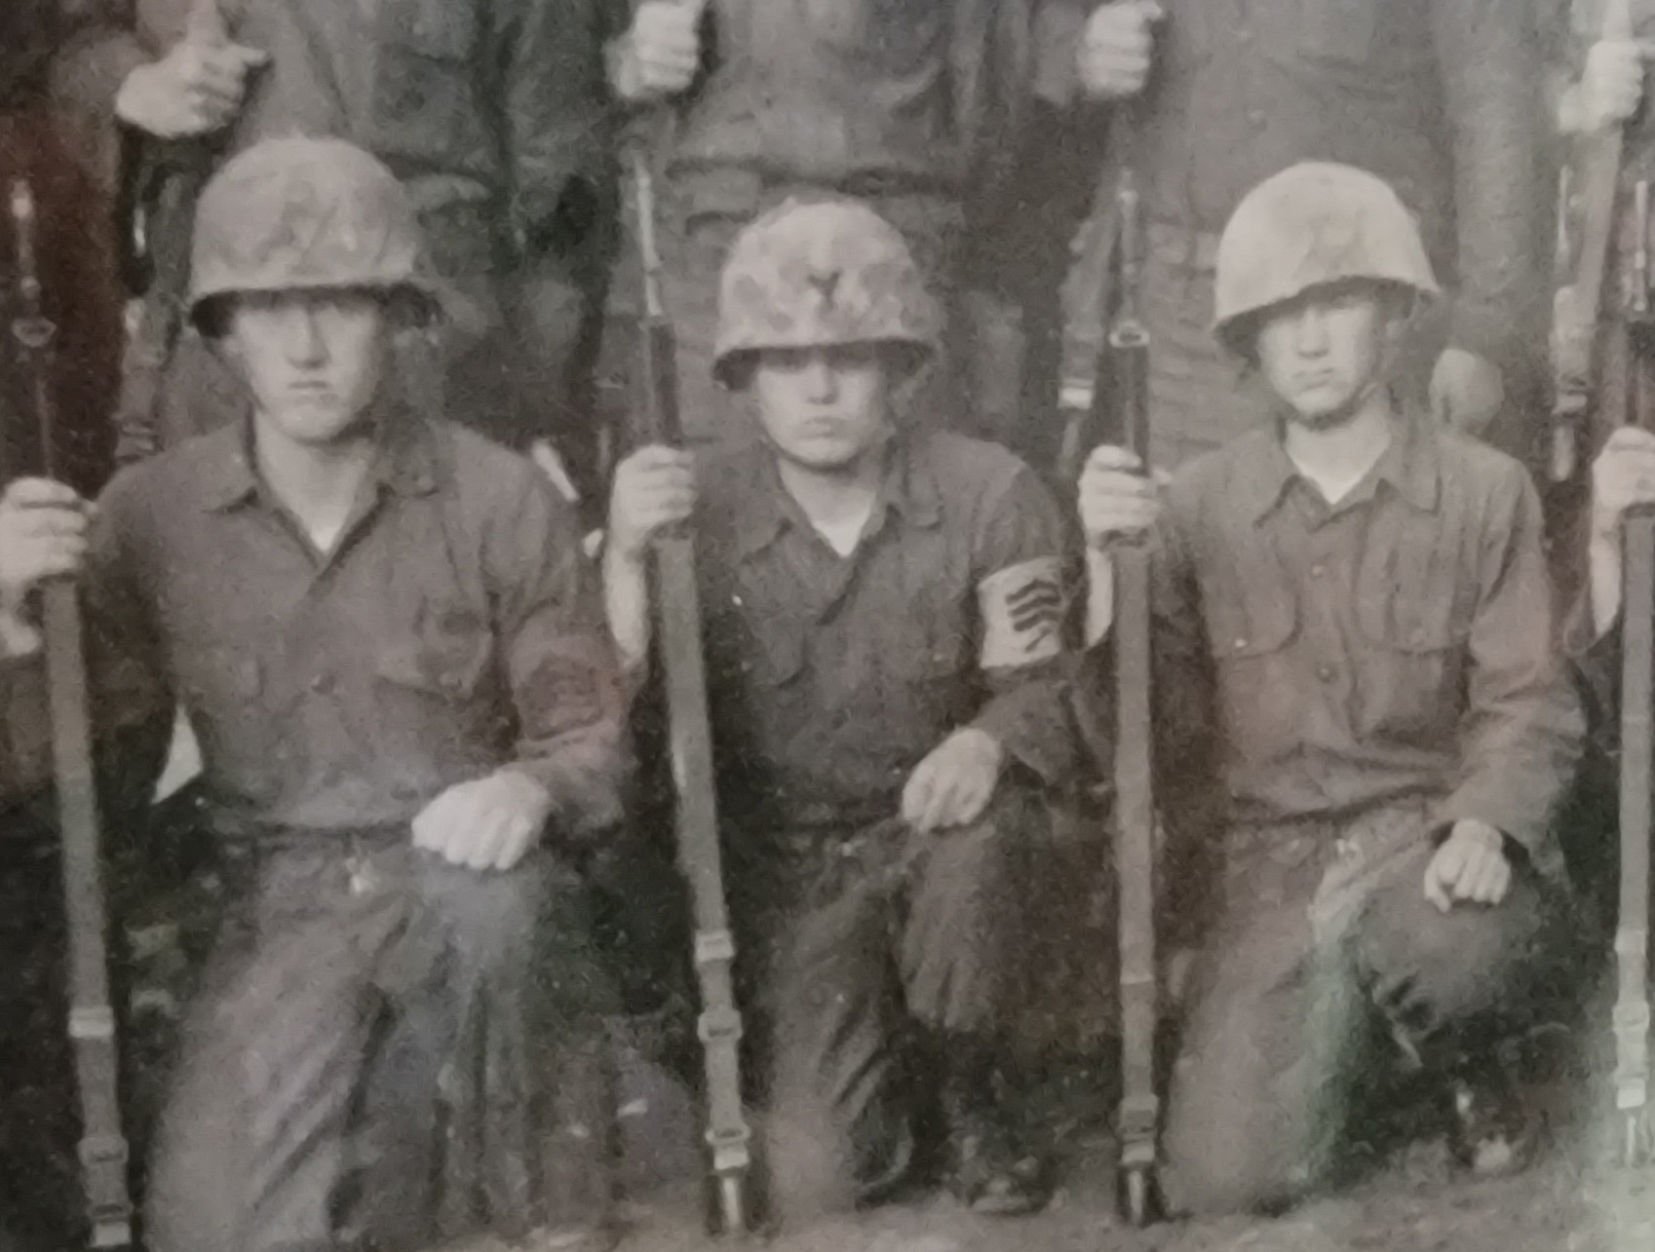 Us Marines In Vietnam